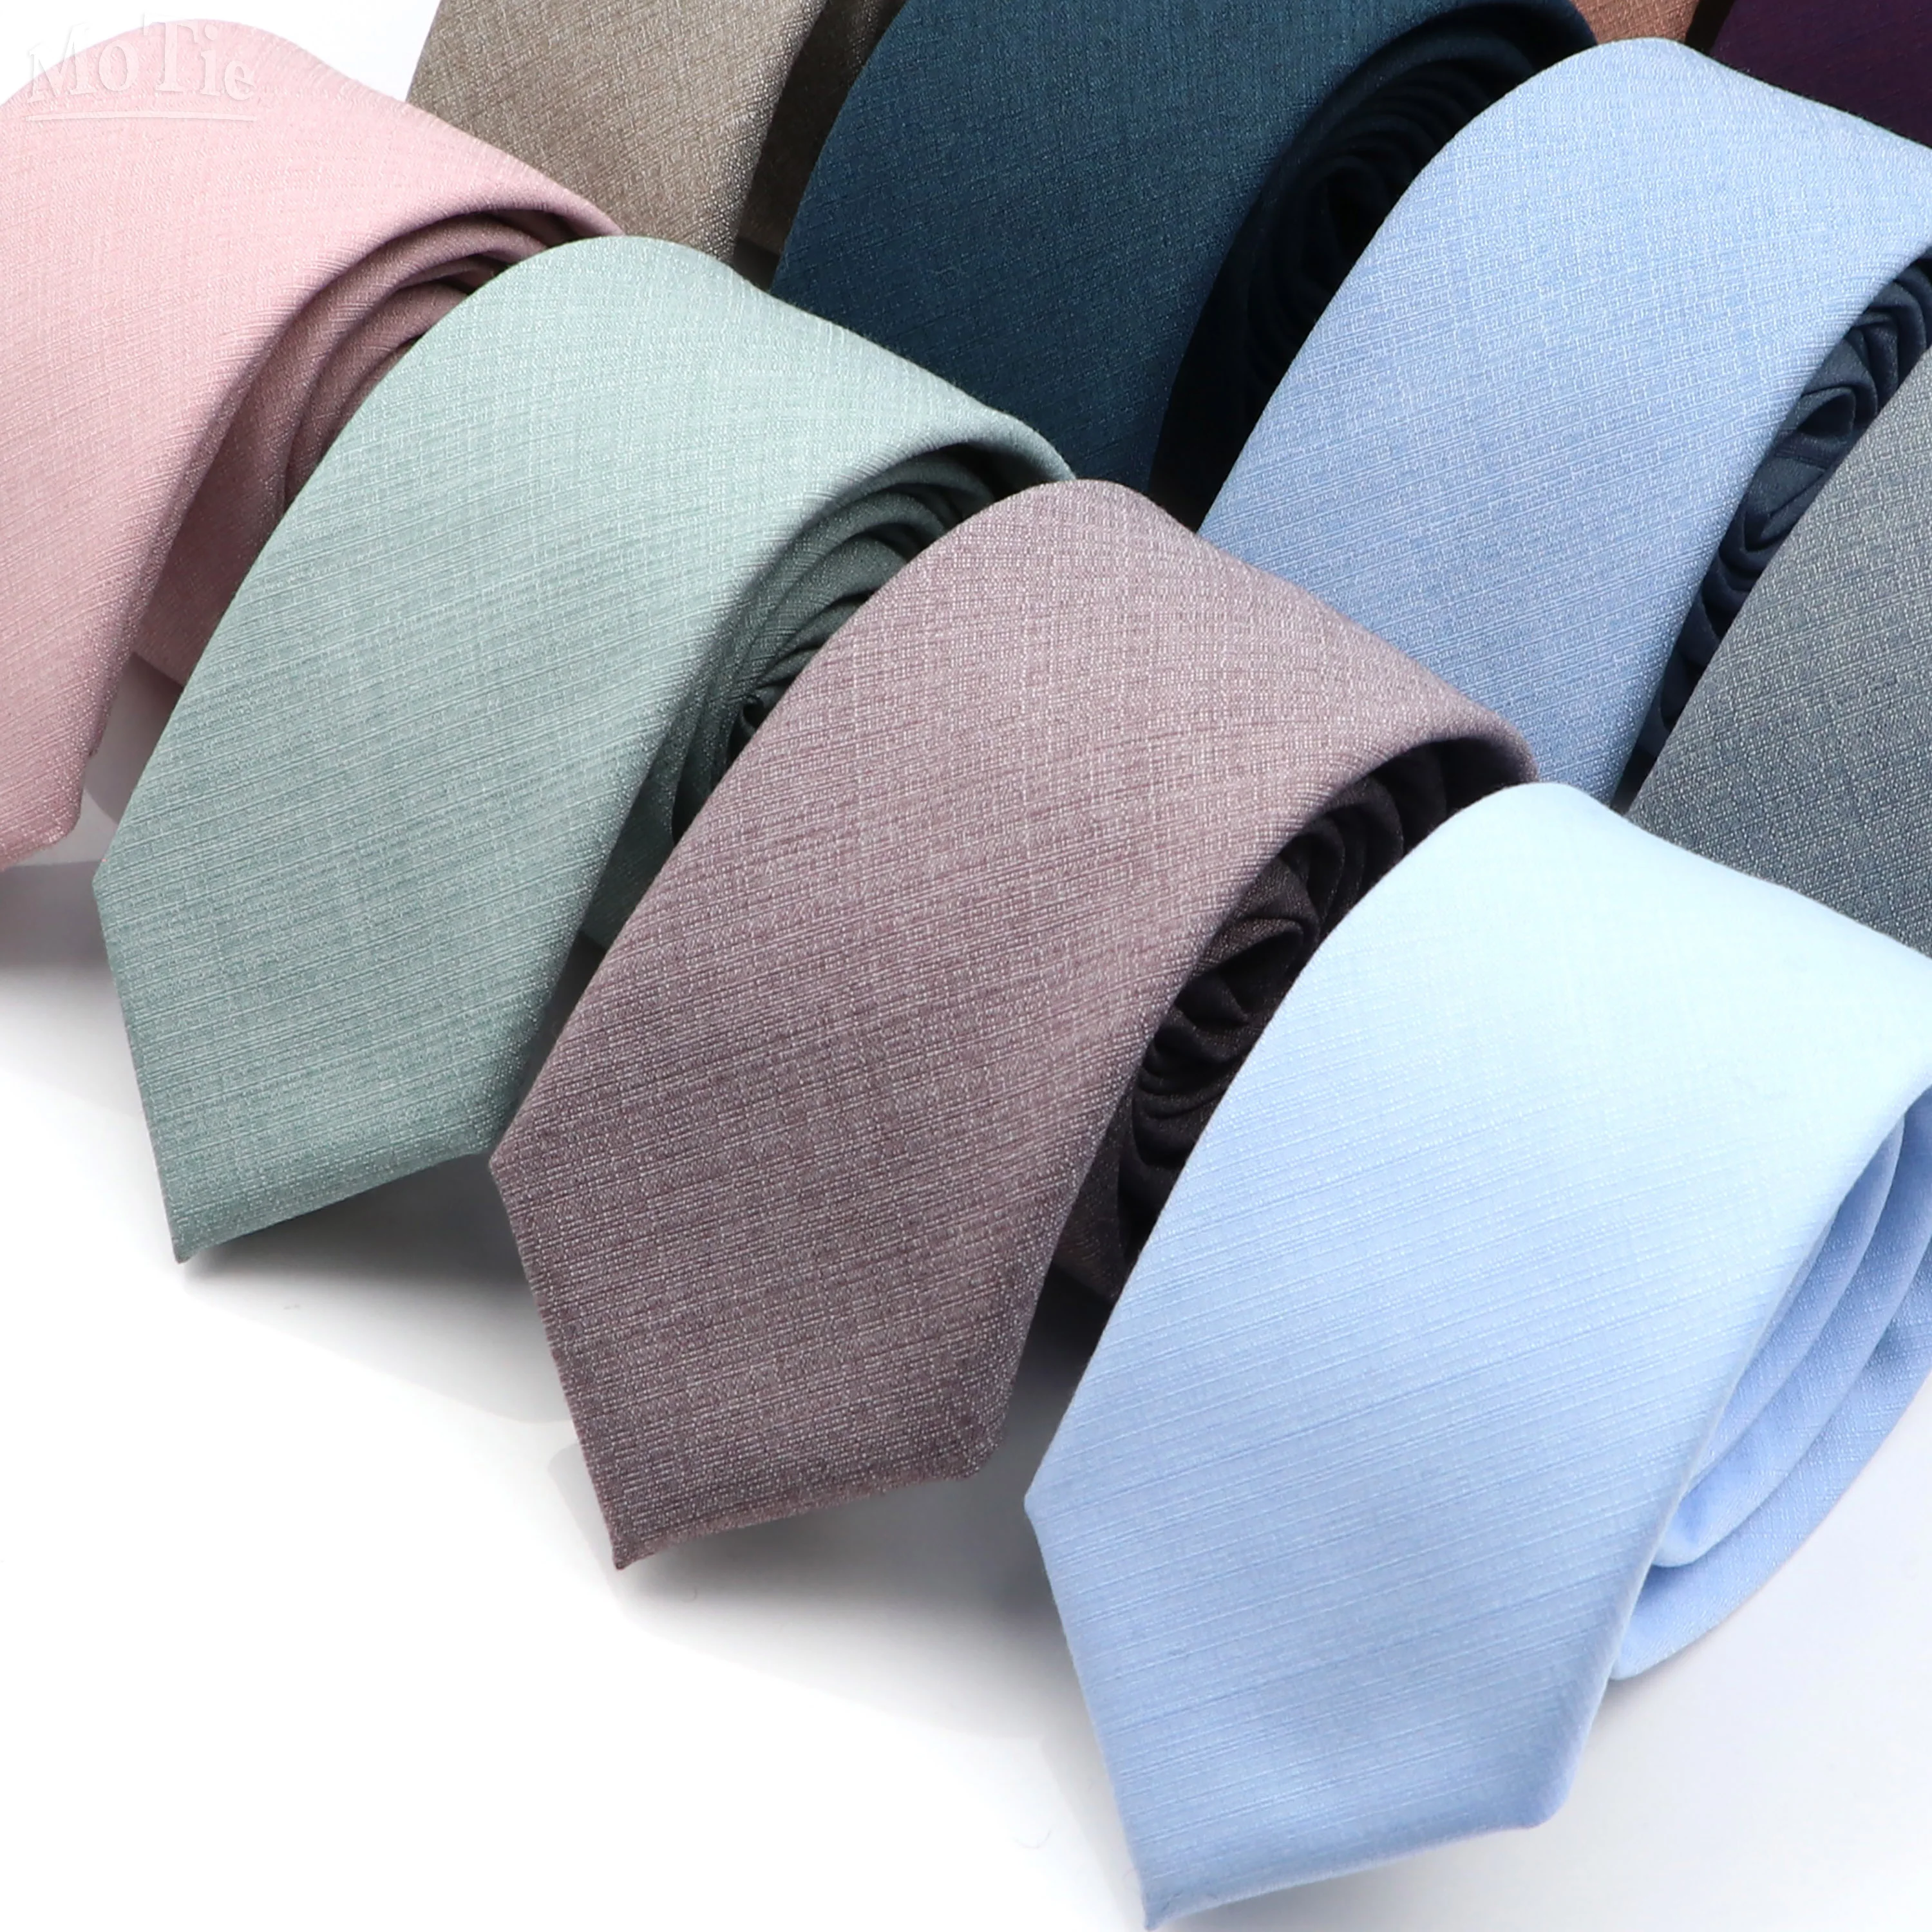 

New Men's Solid Color Tie Skinny Casual Anti-wrinkle Necktie For Wedding Suit Neckties Pink Blue Grey Ties Cravat Gift Accessory